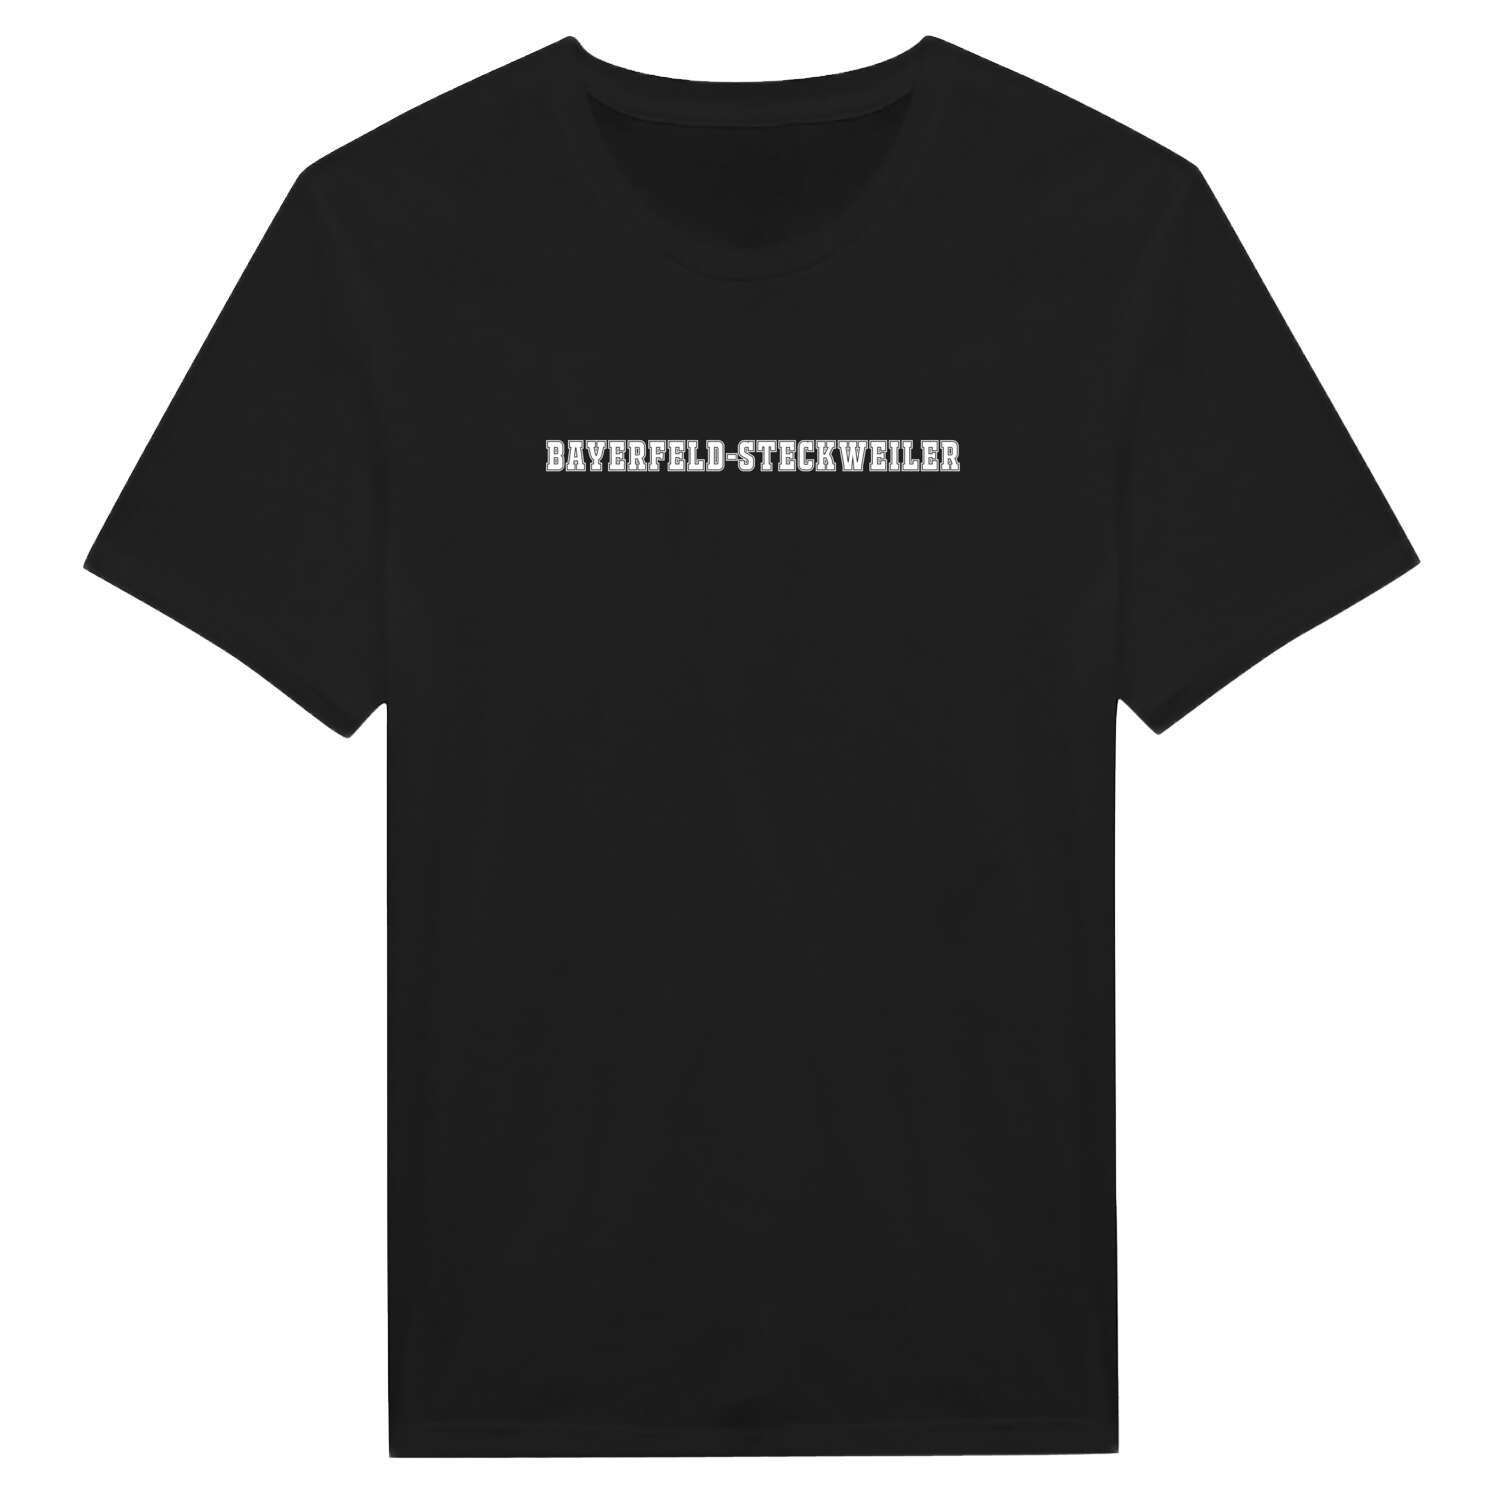 Bayerfeld-Steckweiler T-Shirt »Classic«